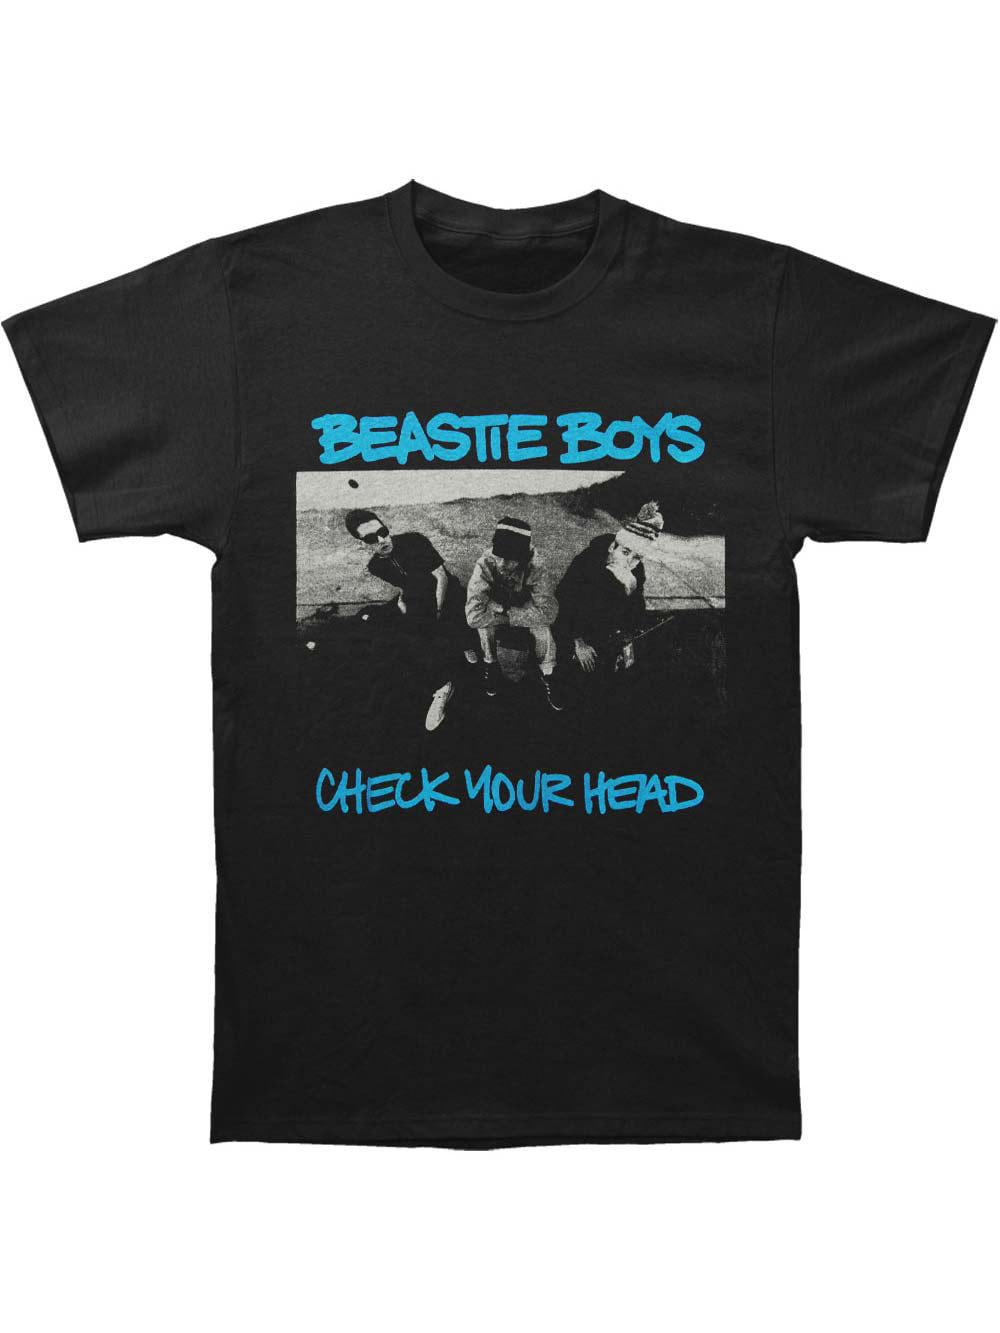 Men's Black T-Shirt US IMPORT Beastie Boys Check Your Head 